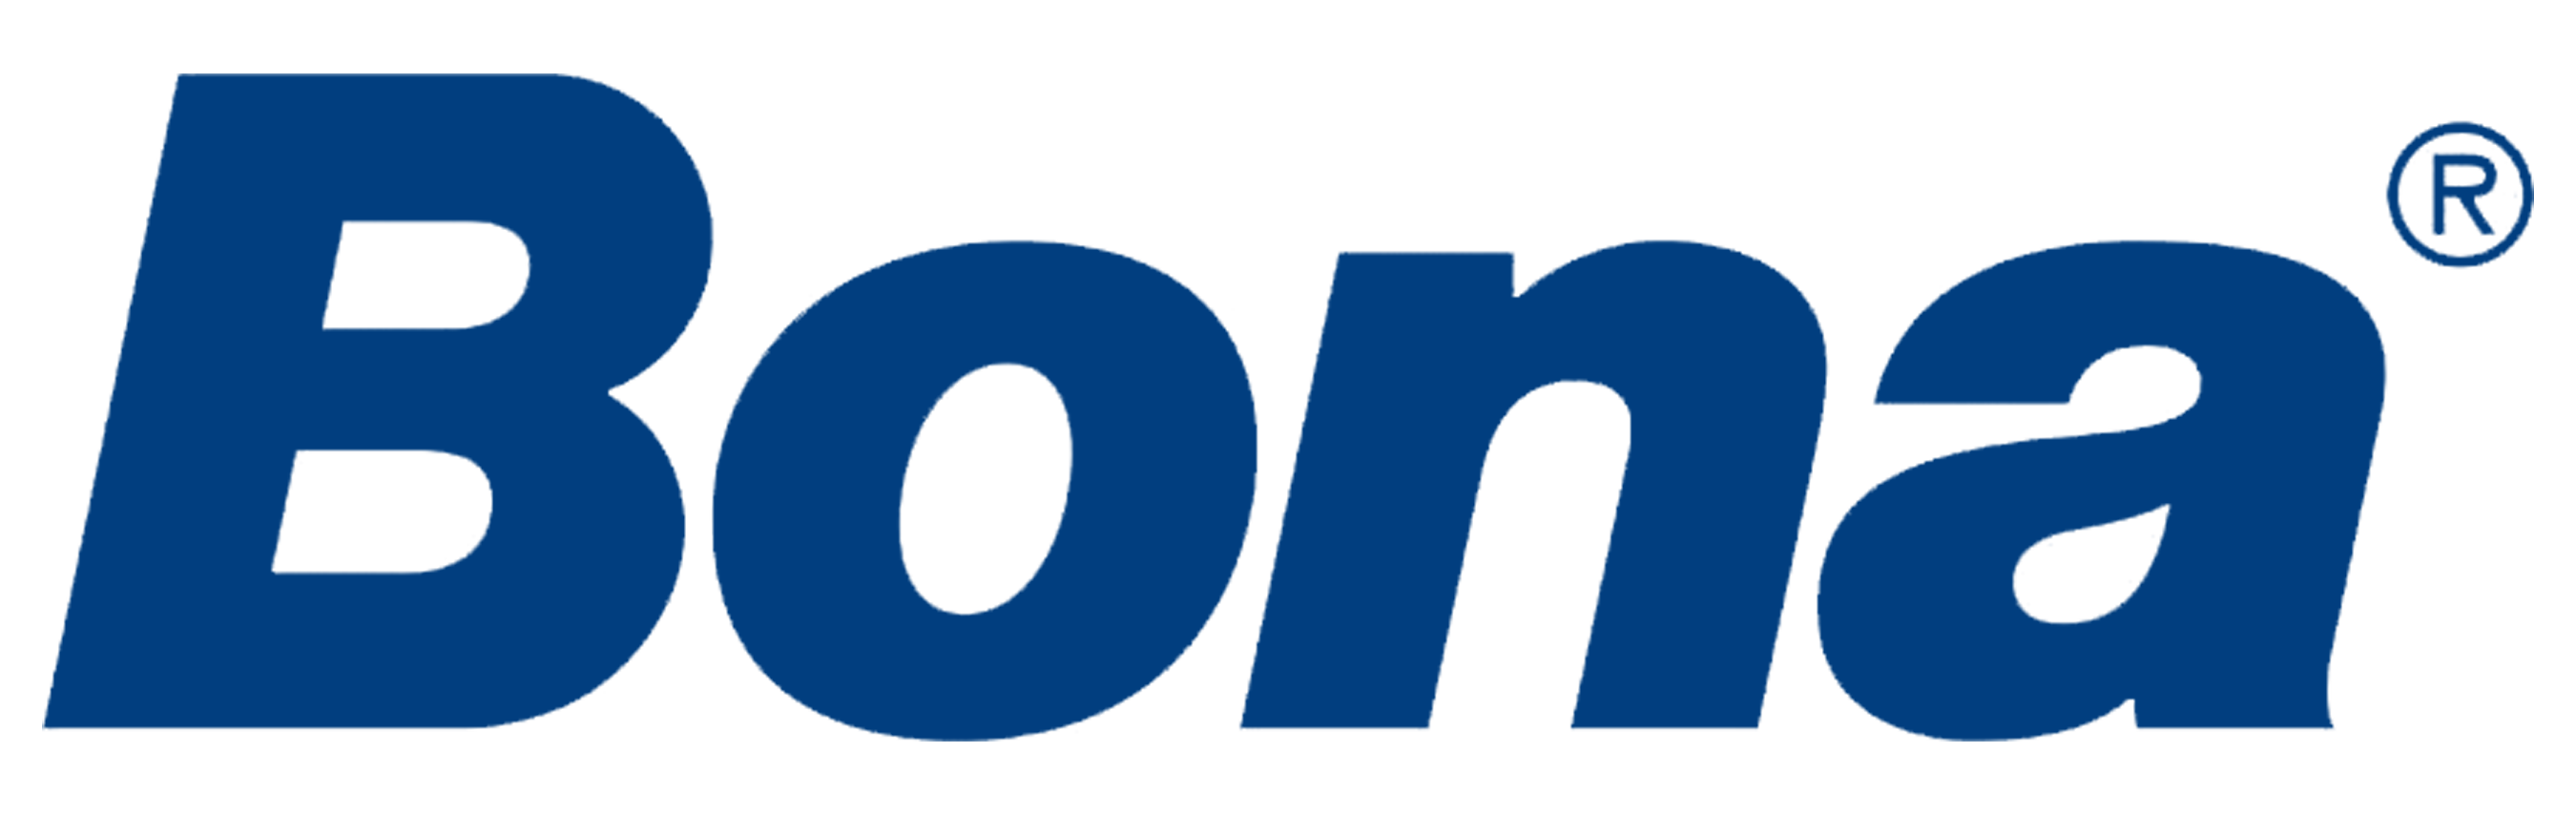 Bona logo_blue